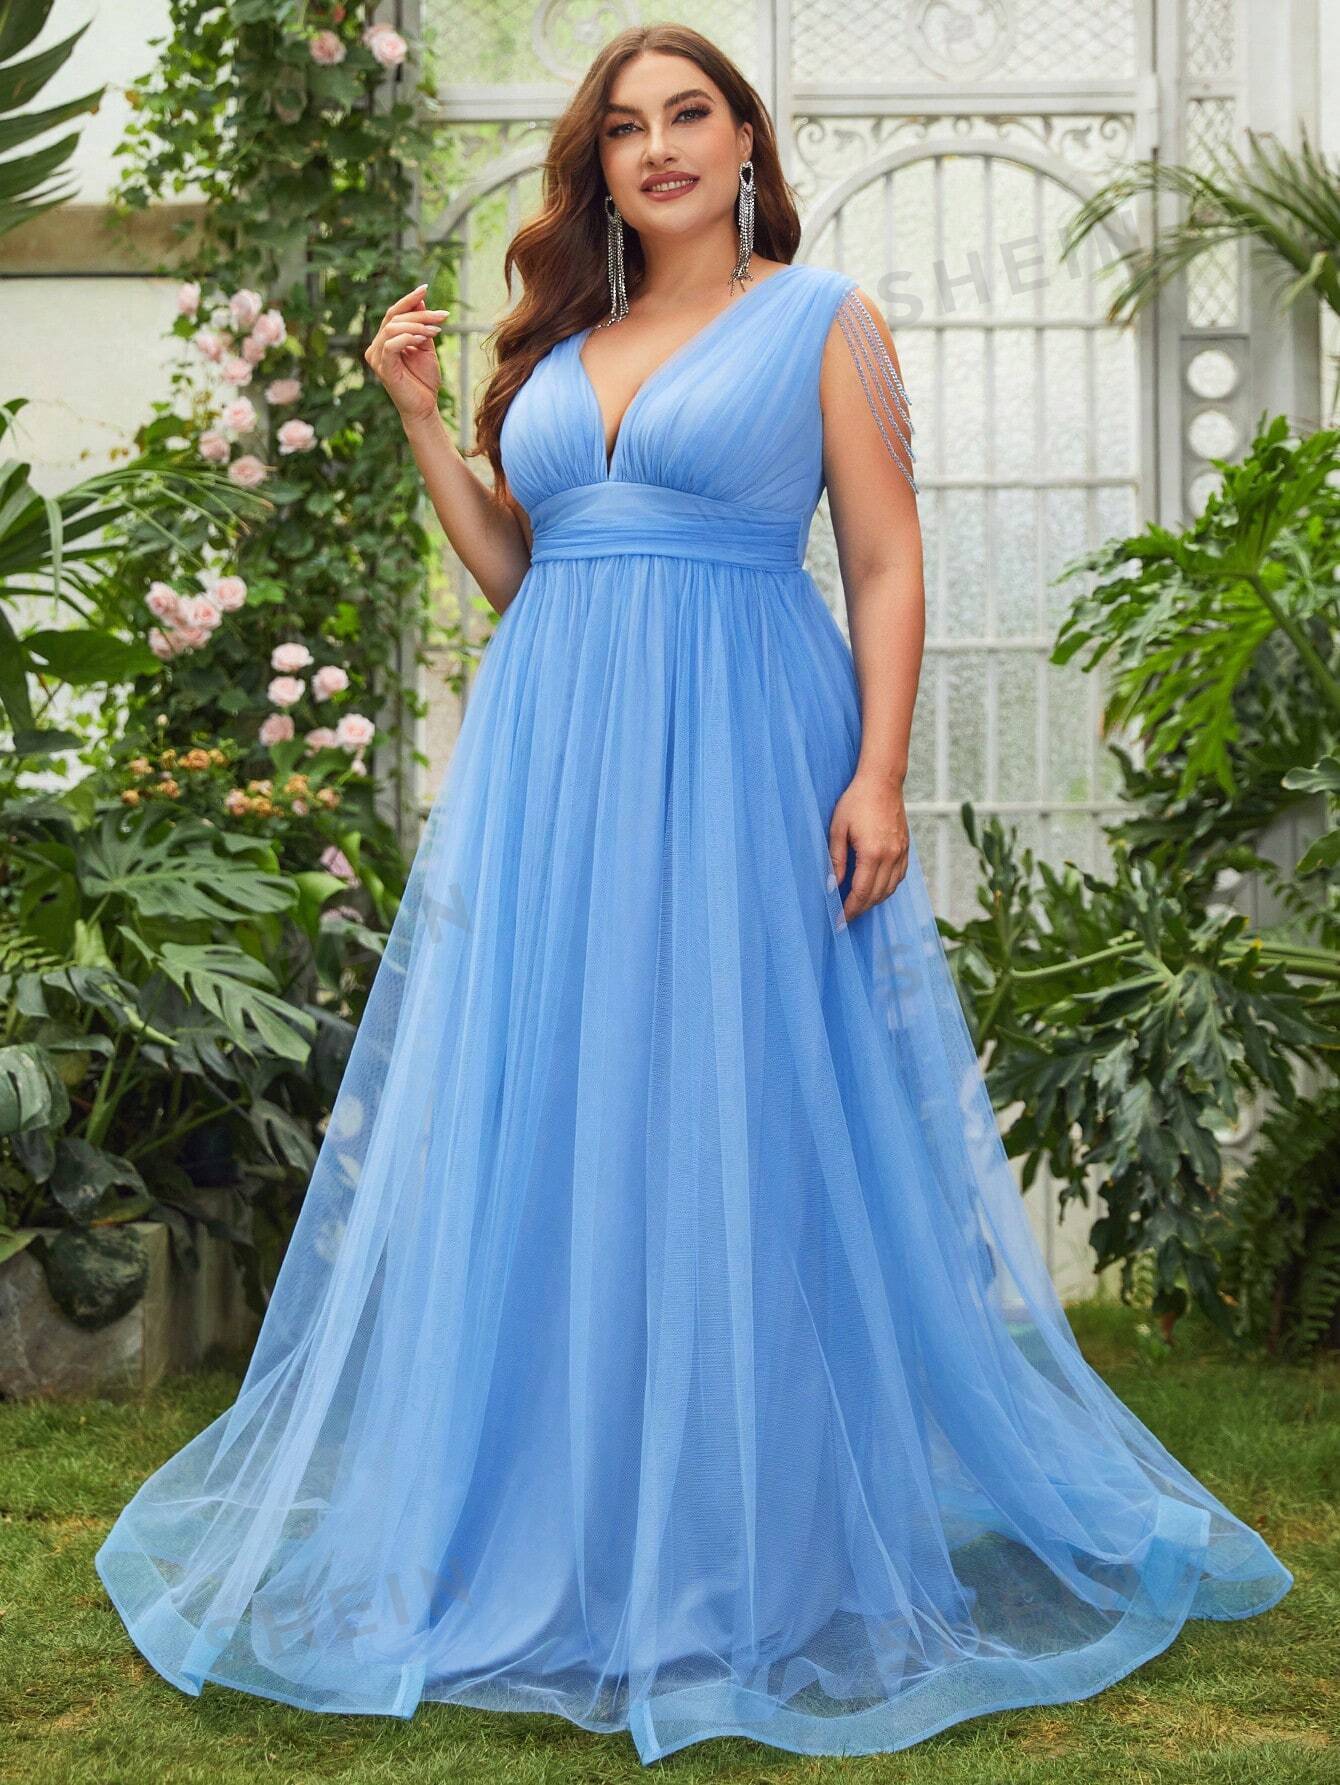 Lyla Stunning Blue A-line Dress